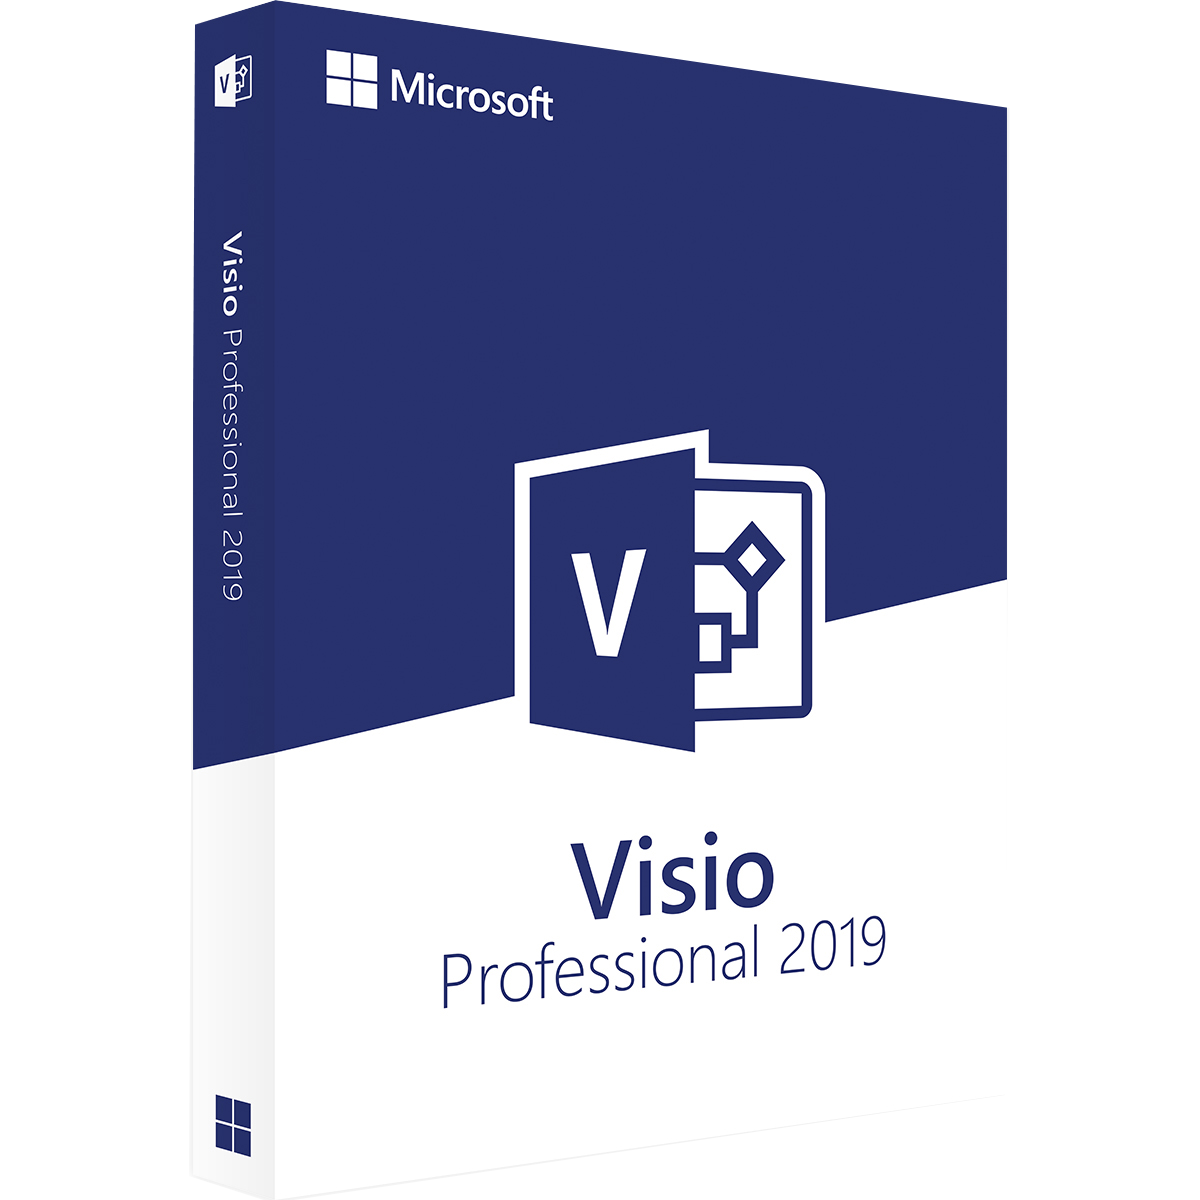 Microsoft Visio 2019 Professional ダウンロード版 プロダクトキーを購入 - FLOX.JP